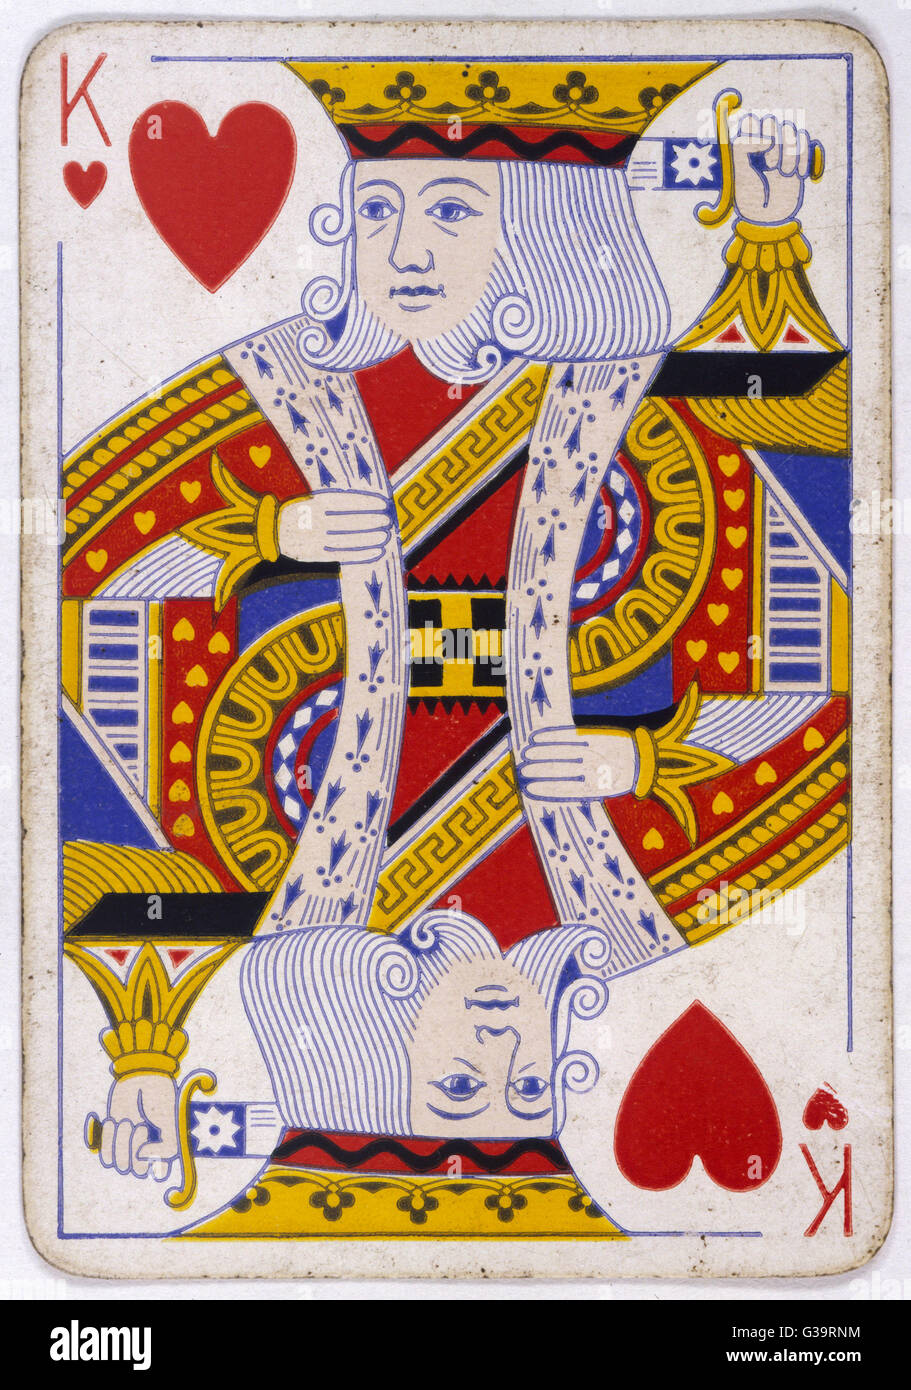 KING OF HEARTS/CARD Stock Photo